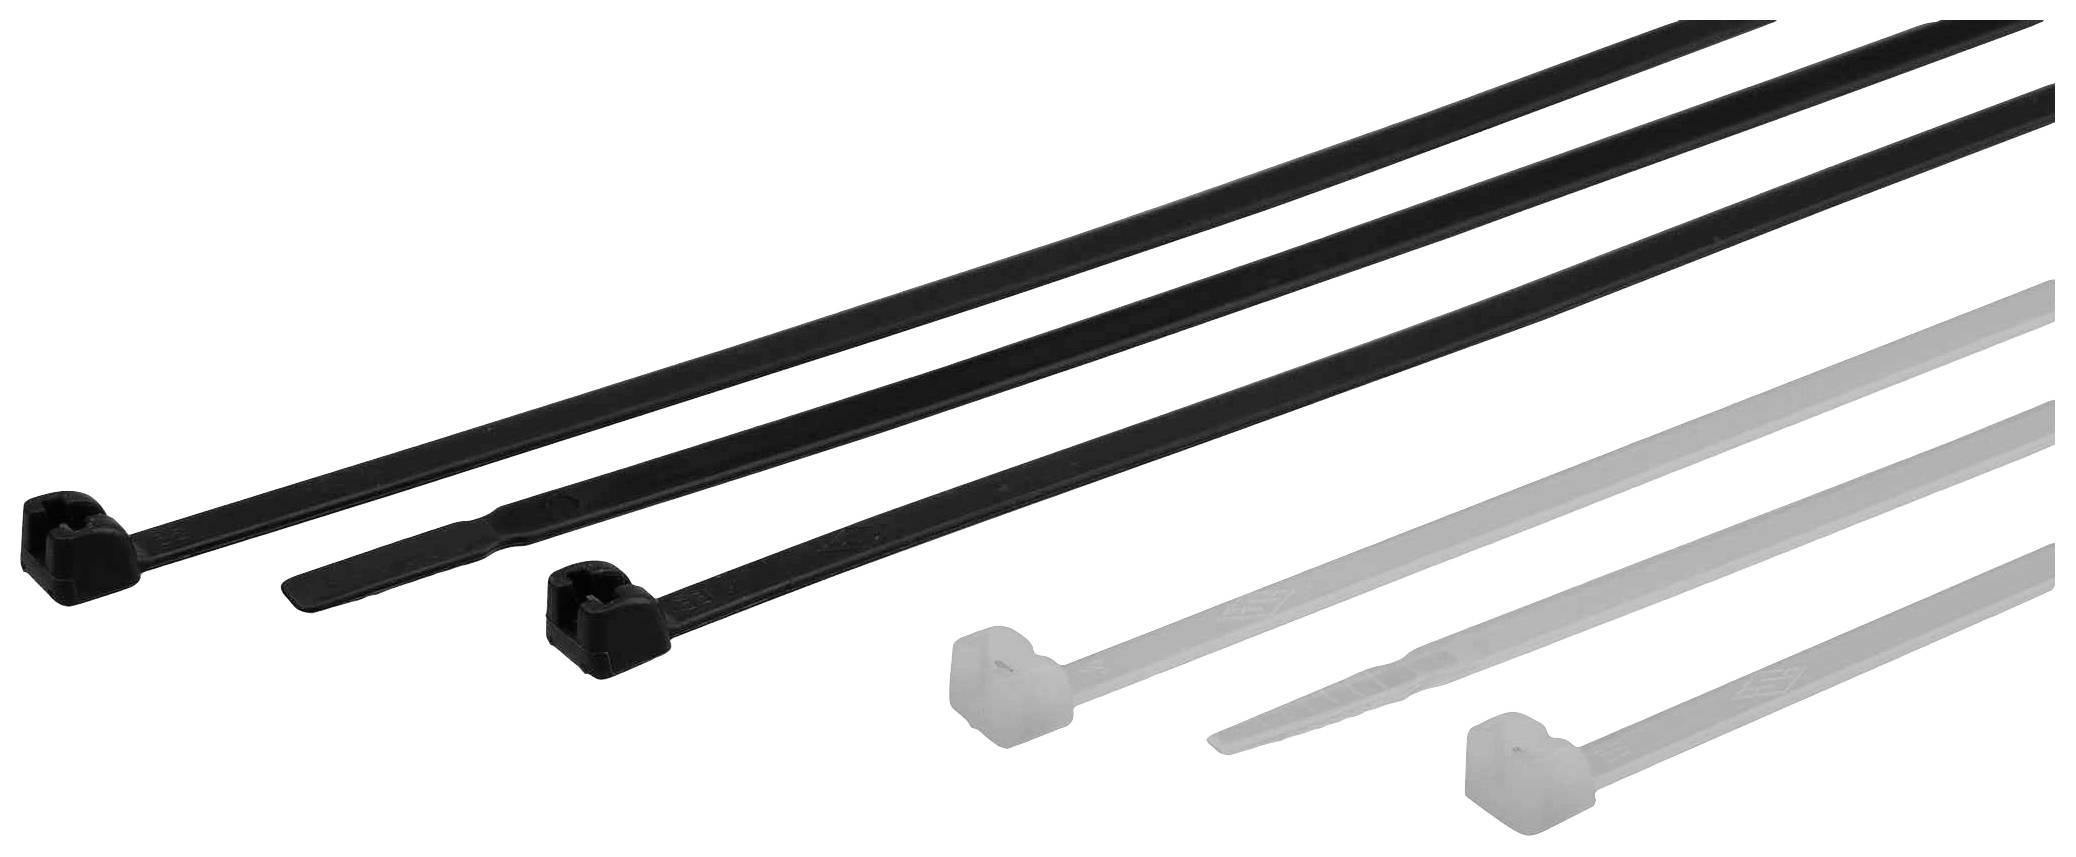 HELUKABEL 907023-1000 T-SK 4-101 Kabelbinder mit Stahlzunge 360 mm 4.5 mm Transparent mit Metal